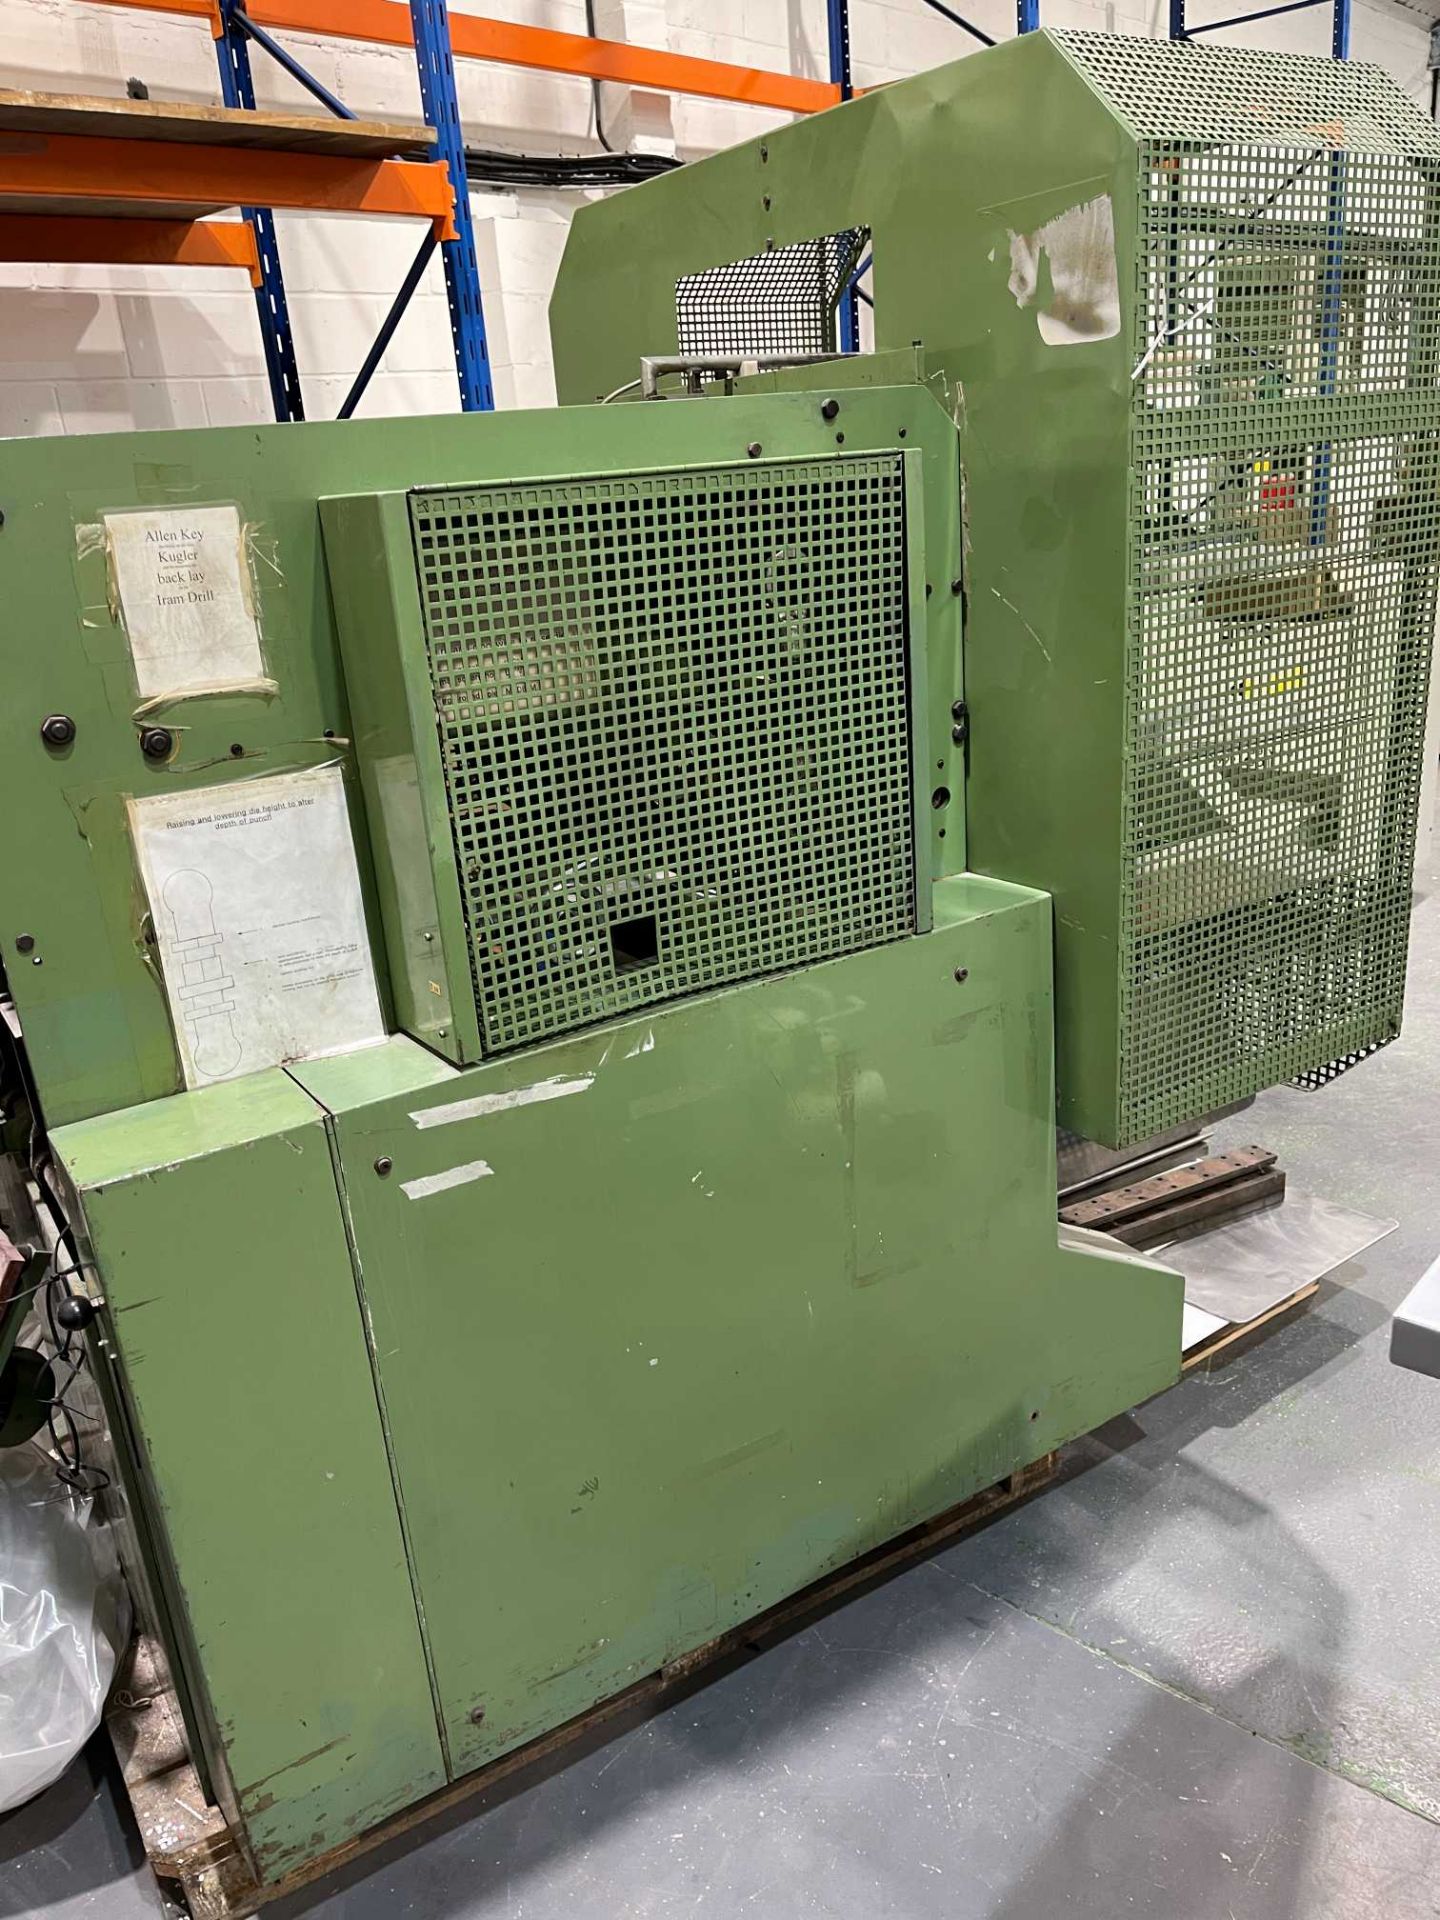 Kugler heavy duty automatic punching machine; Serial No: 1046-341-2 (1985); 100,000 cycles per - Bild 6 aus 6